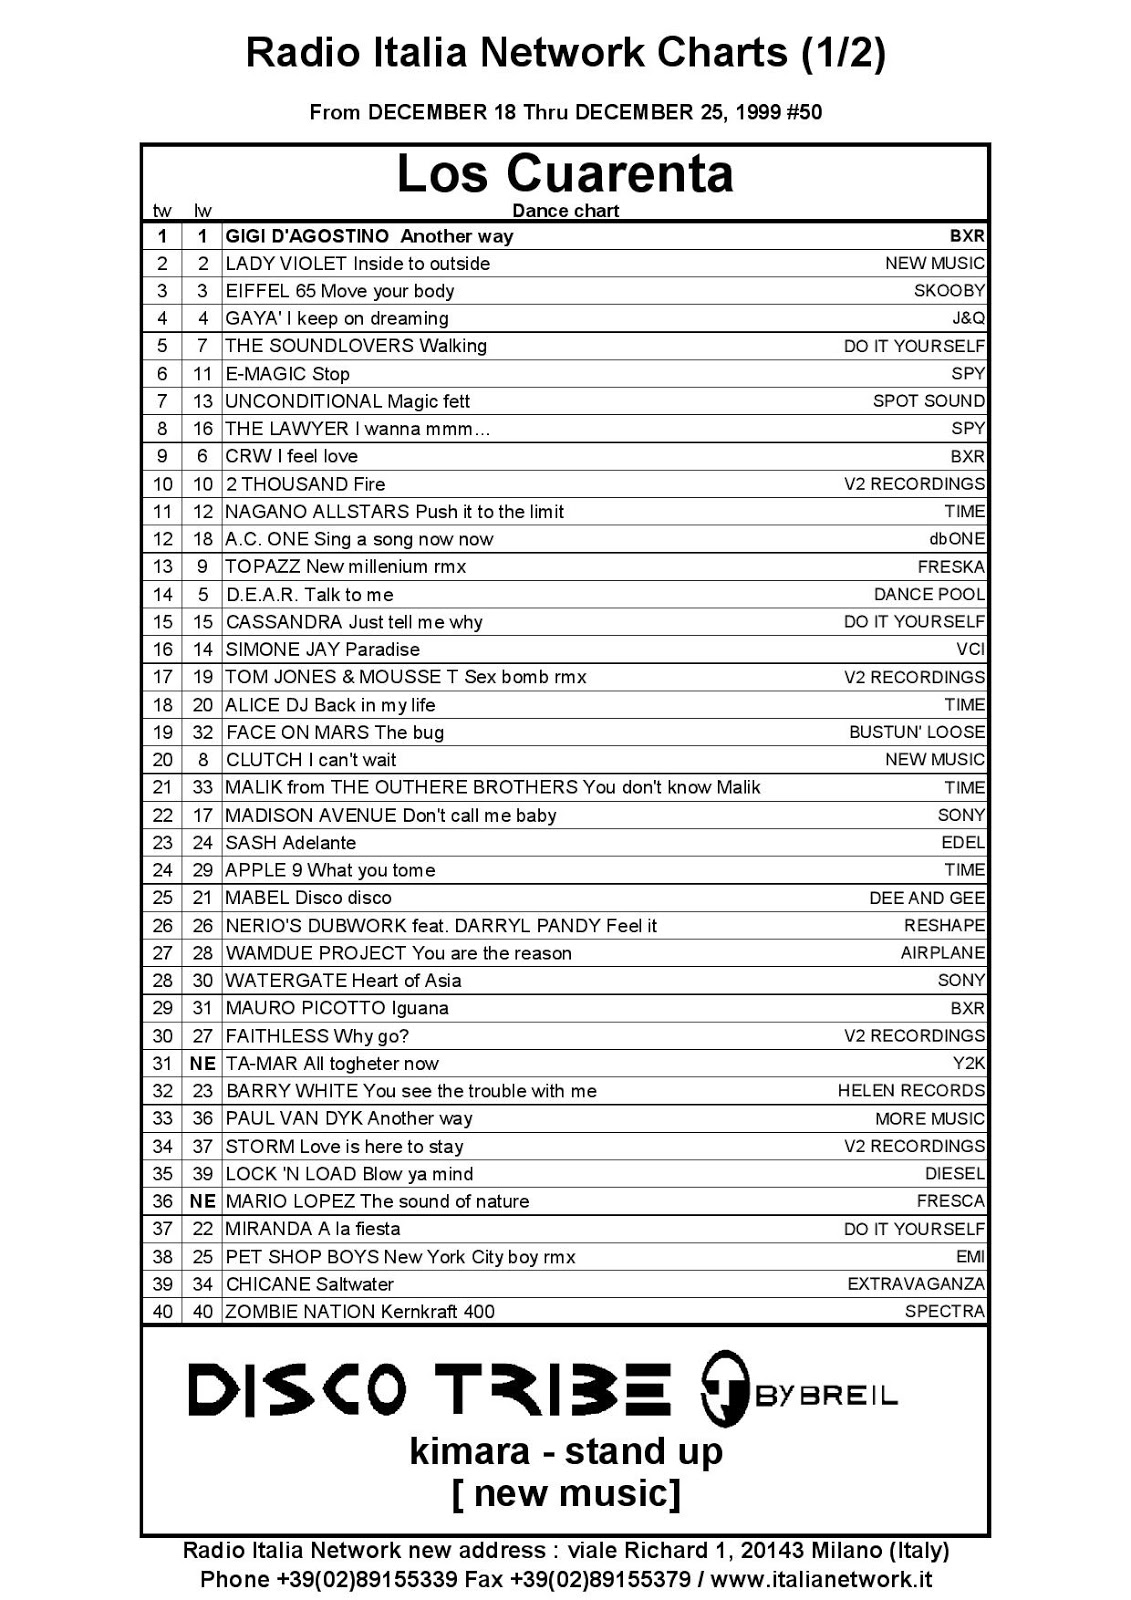 2005 Music Charts